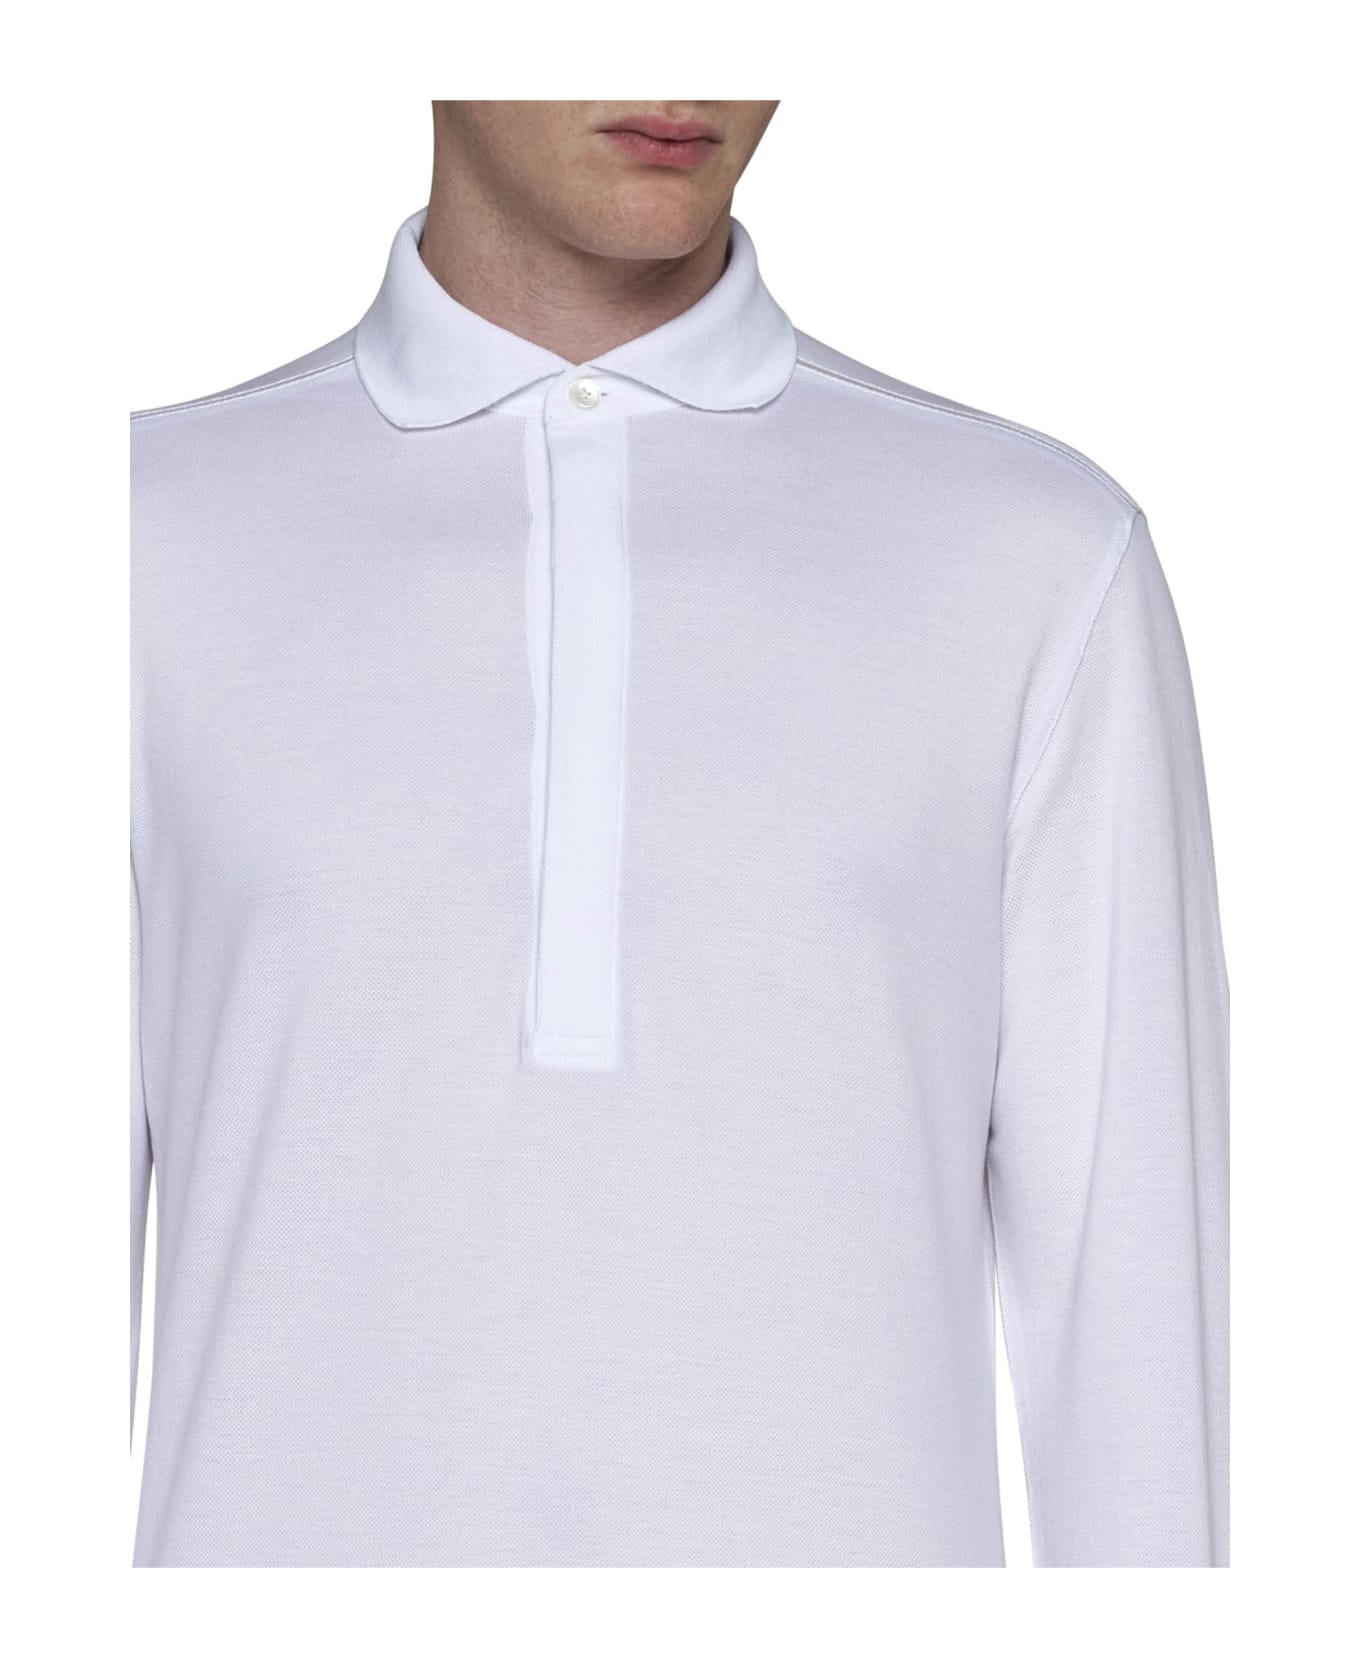 Zegna Polo Shirt - White